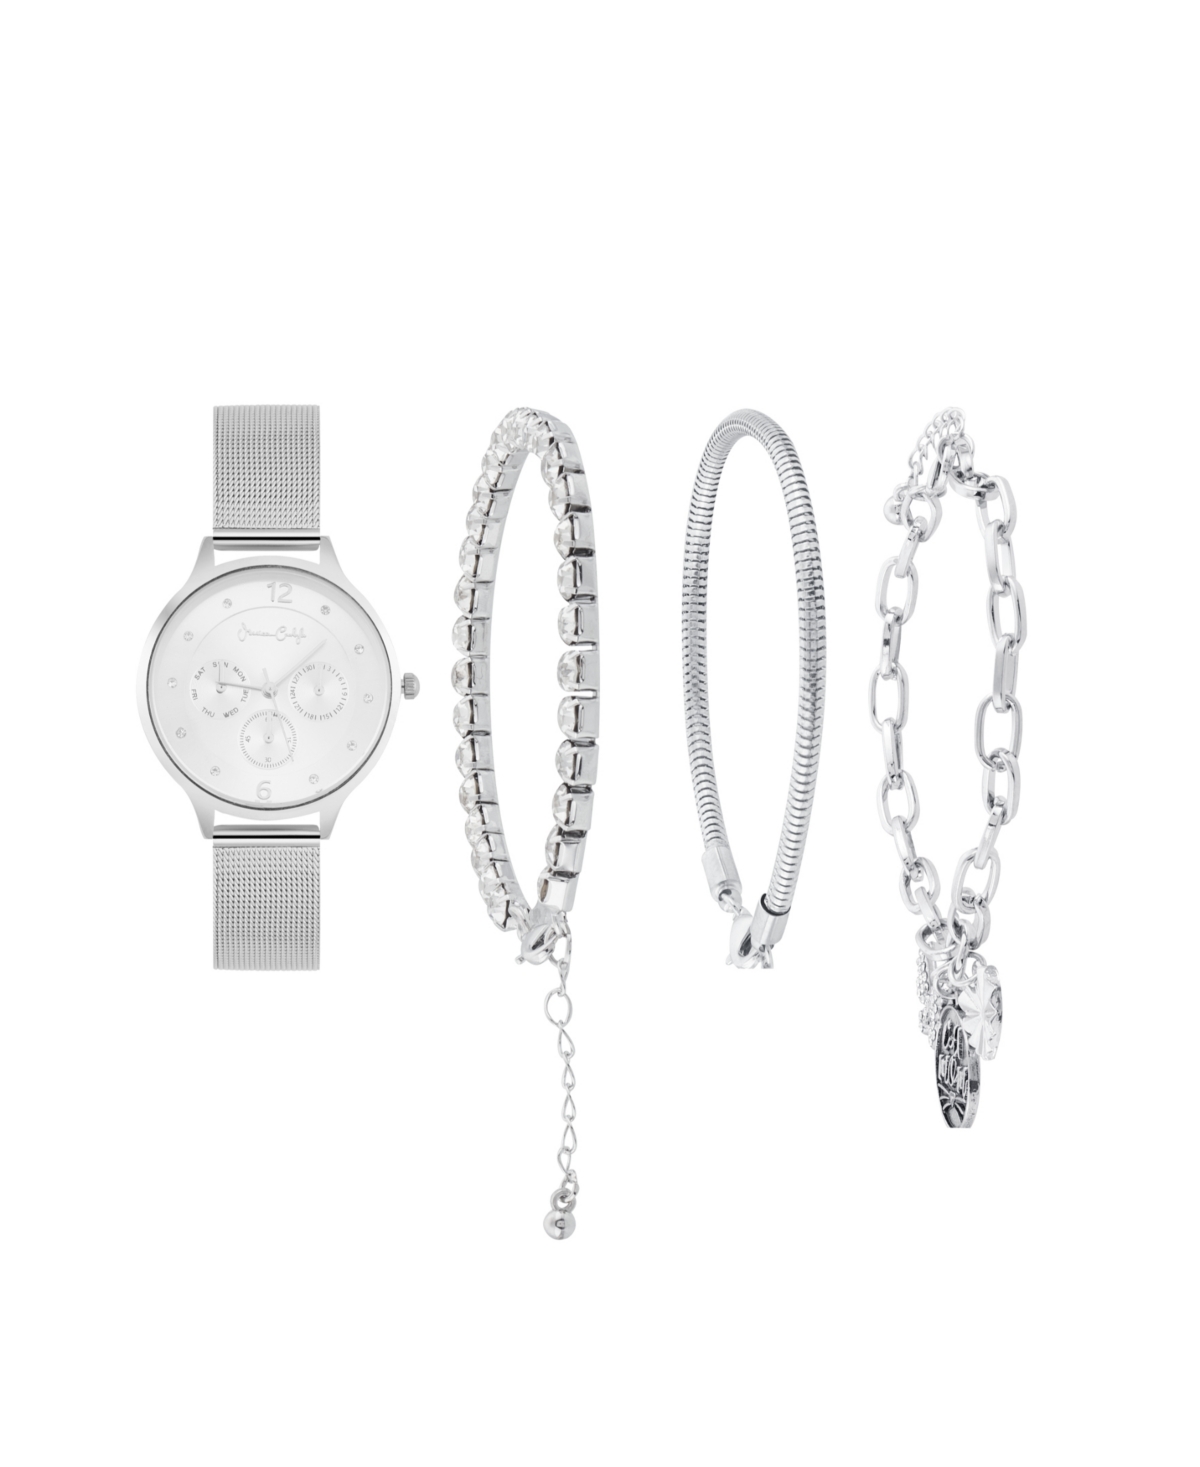 Women's Silver-Tone Mesh Metal Alloy Bracelet Watch 36mm Gift Set - Shiny Silver